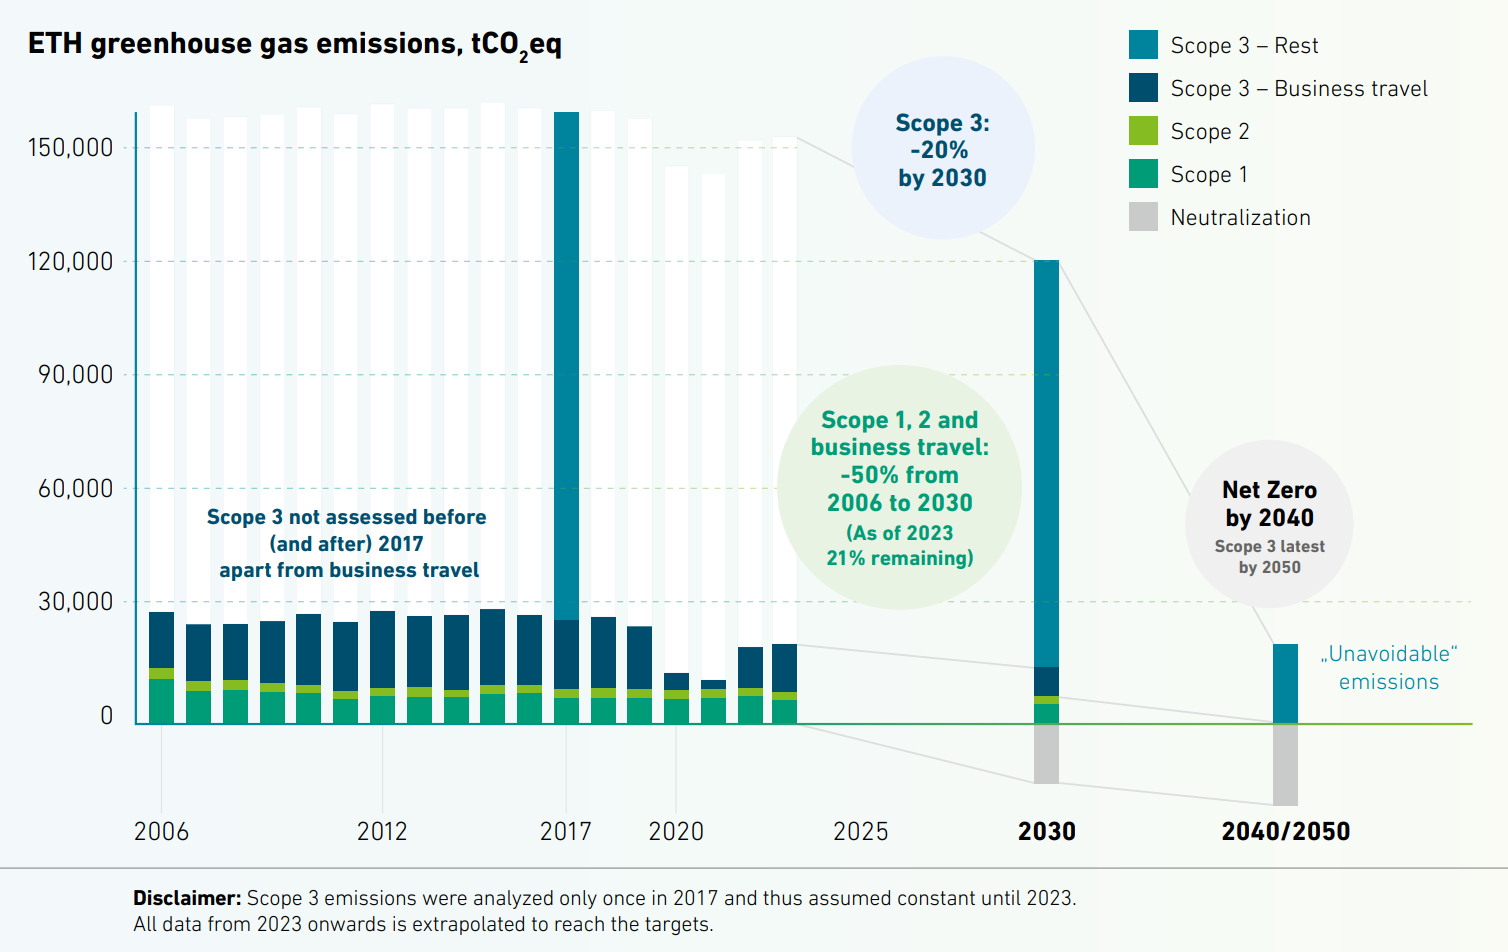 ETH's emissions reduction path until 2050